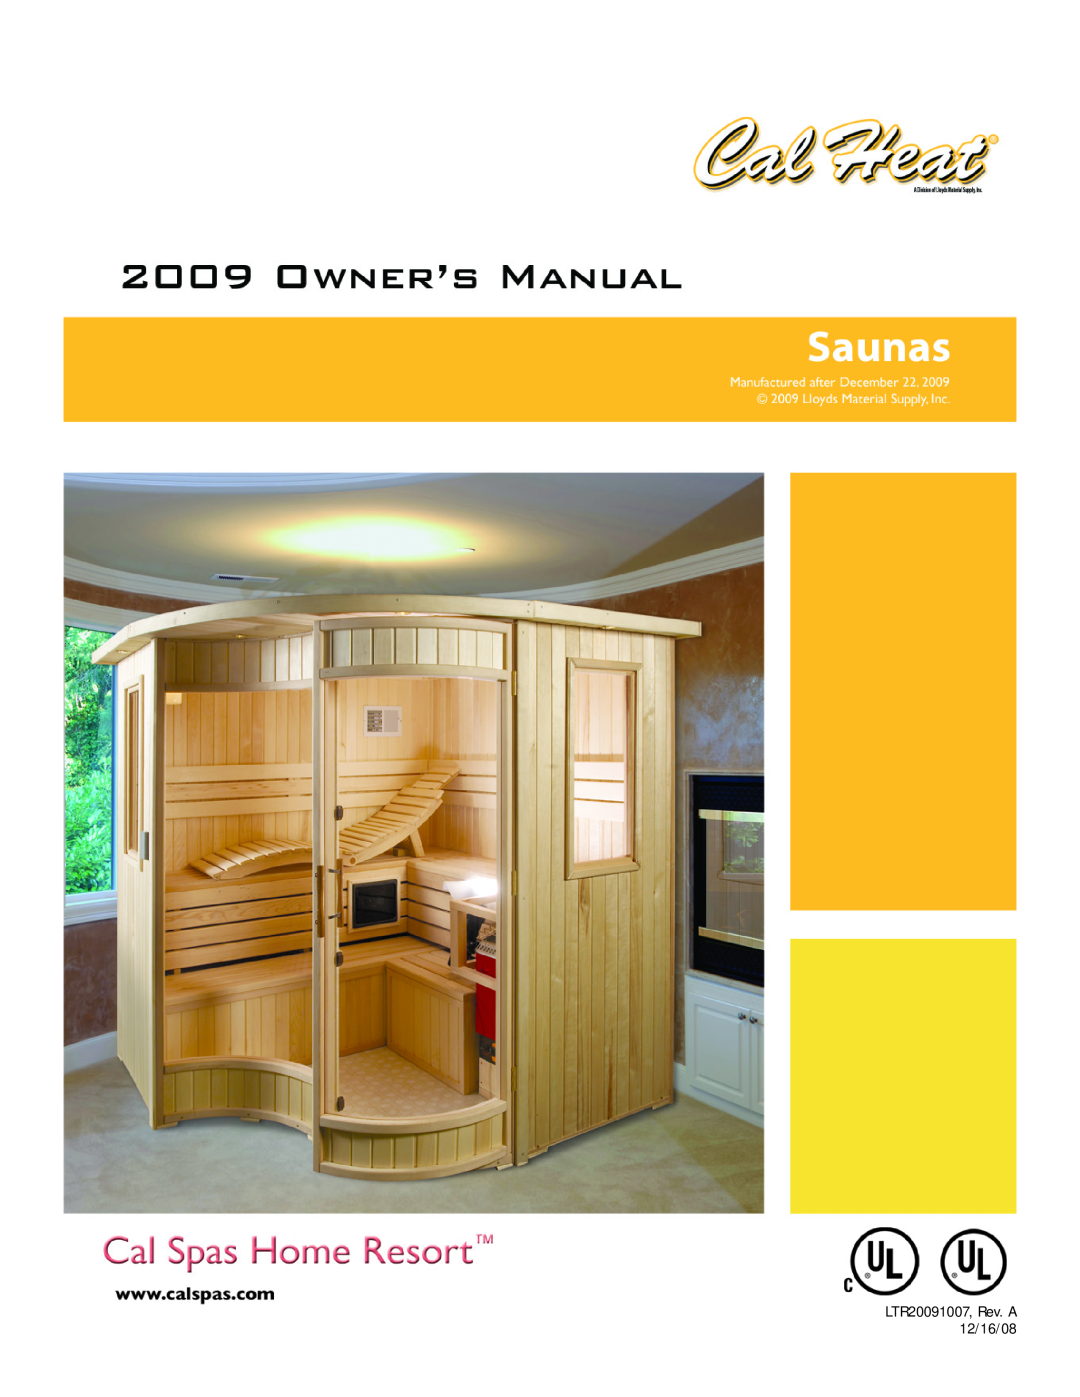 Cal Spas Saunas manual LTR20091007, Rev. A 12/16/08 